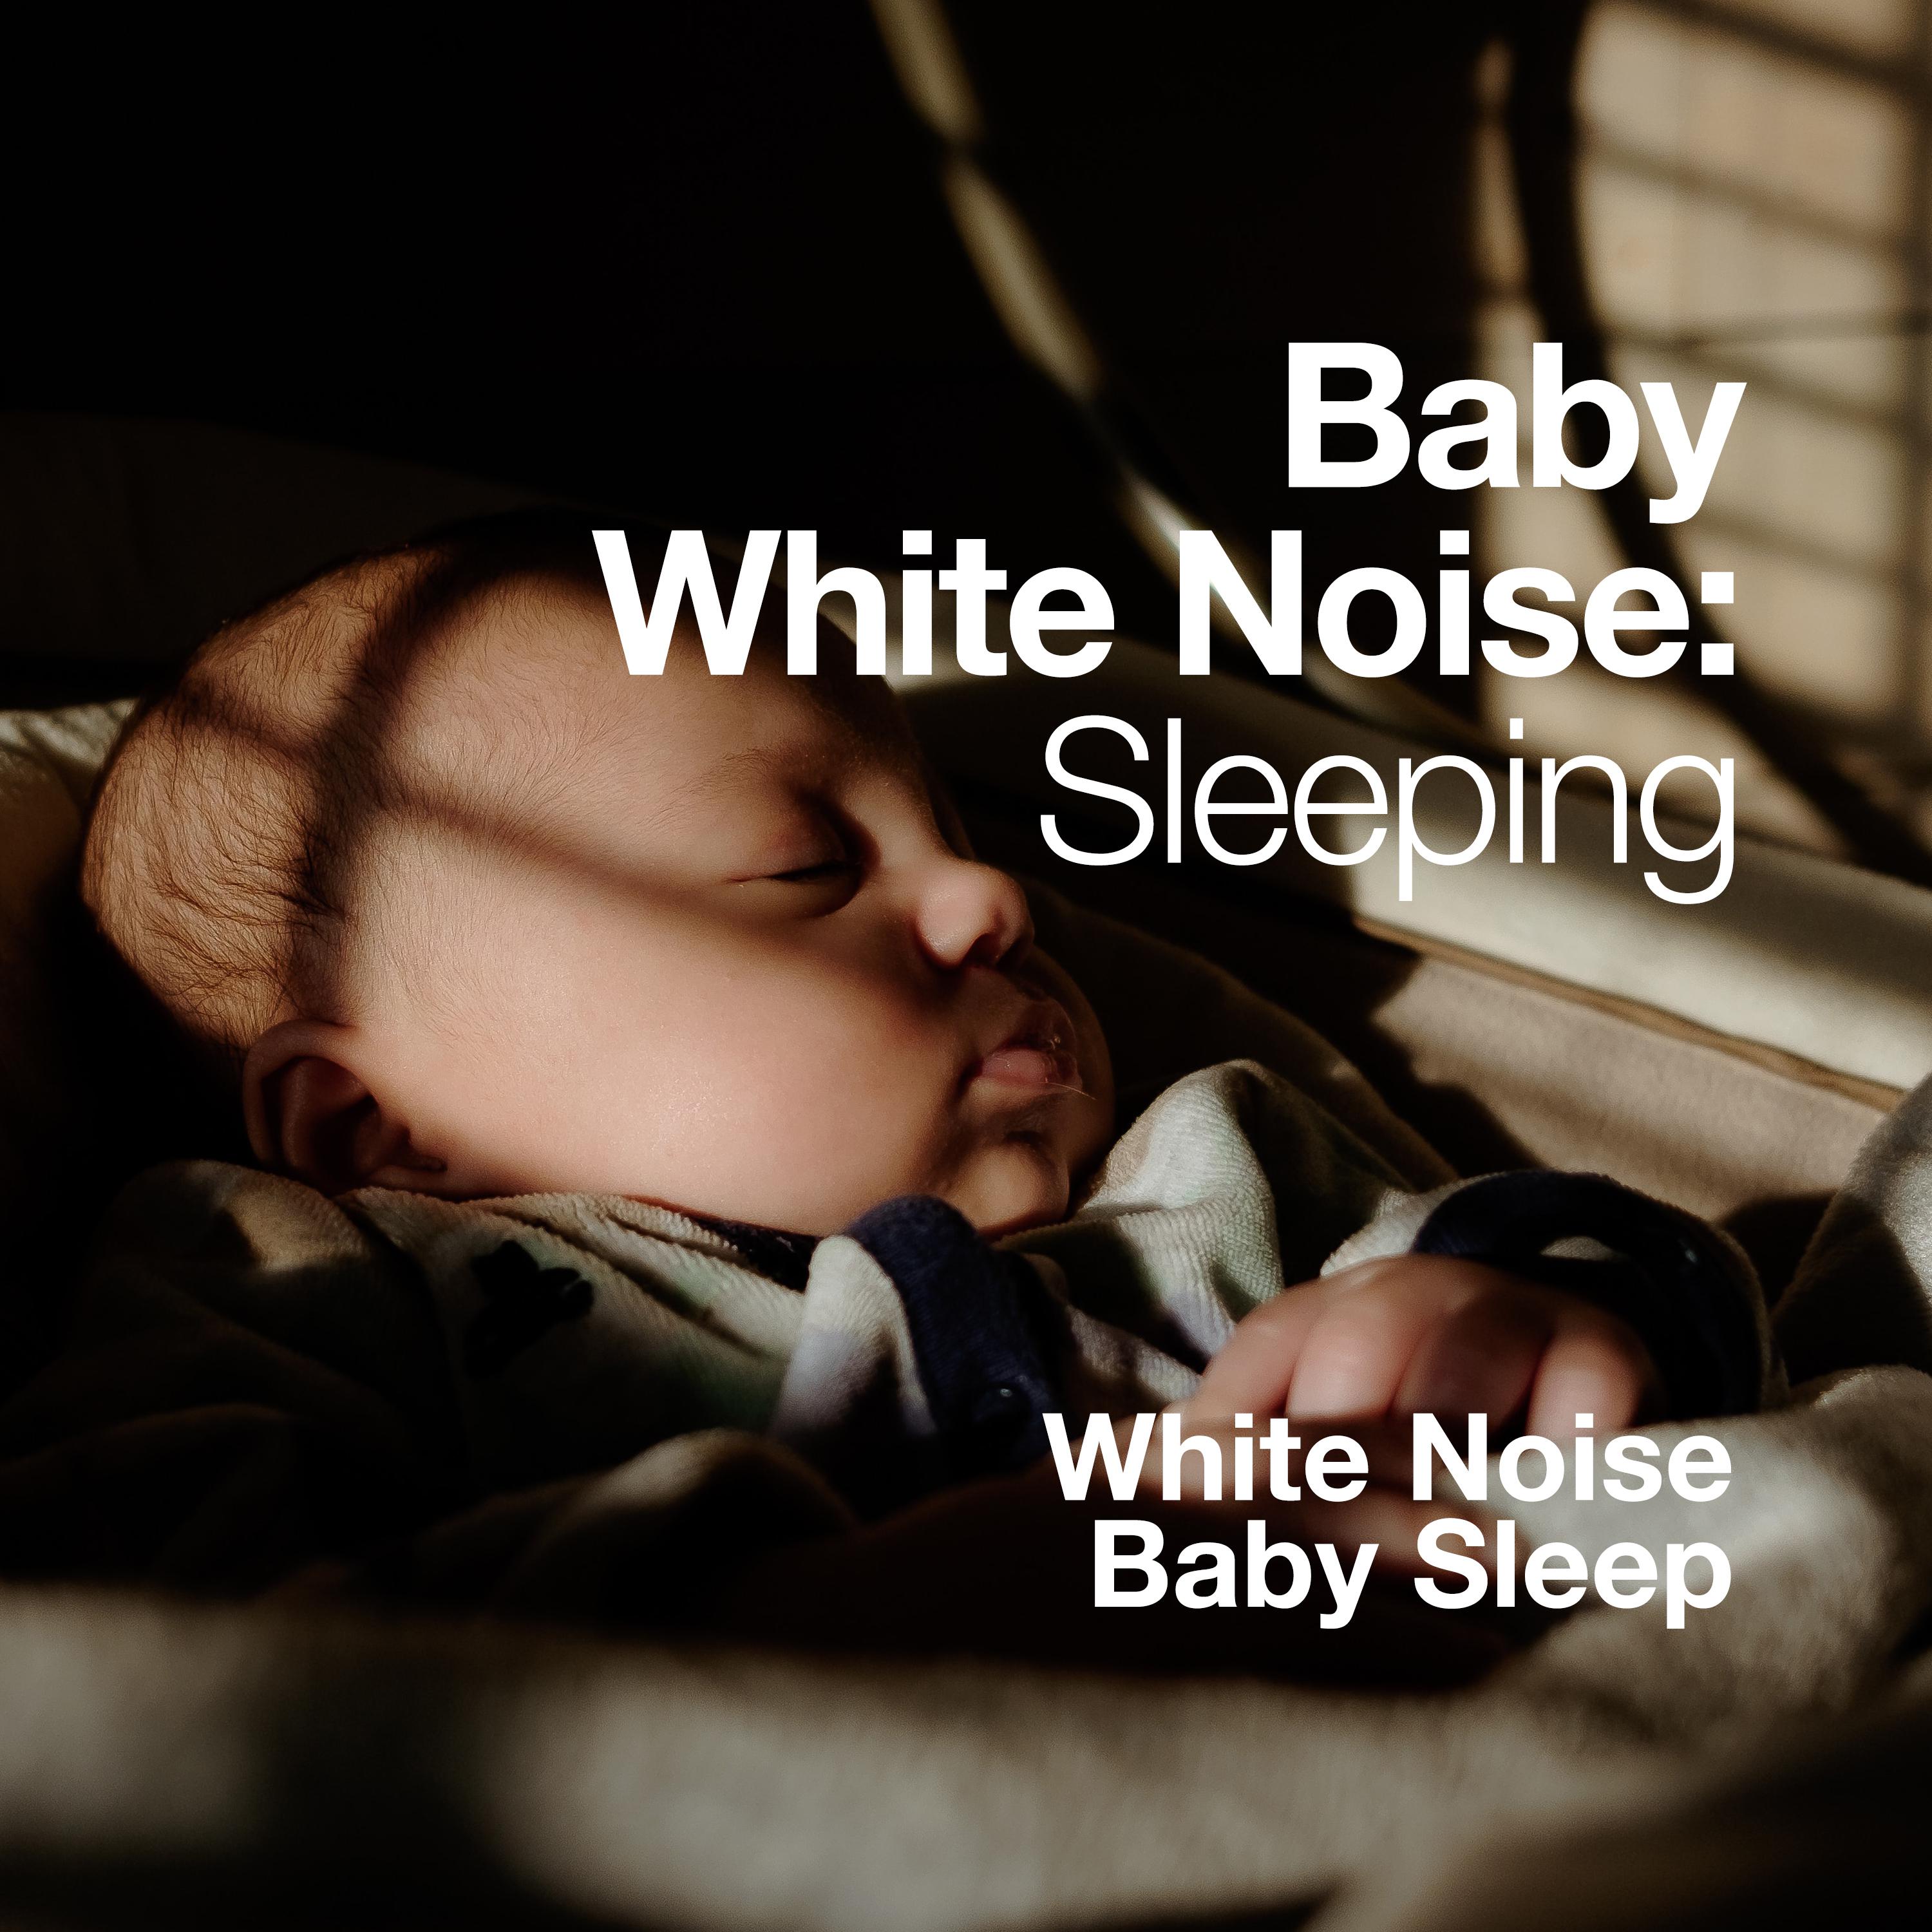 Baby White Noise: Sleeping